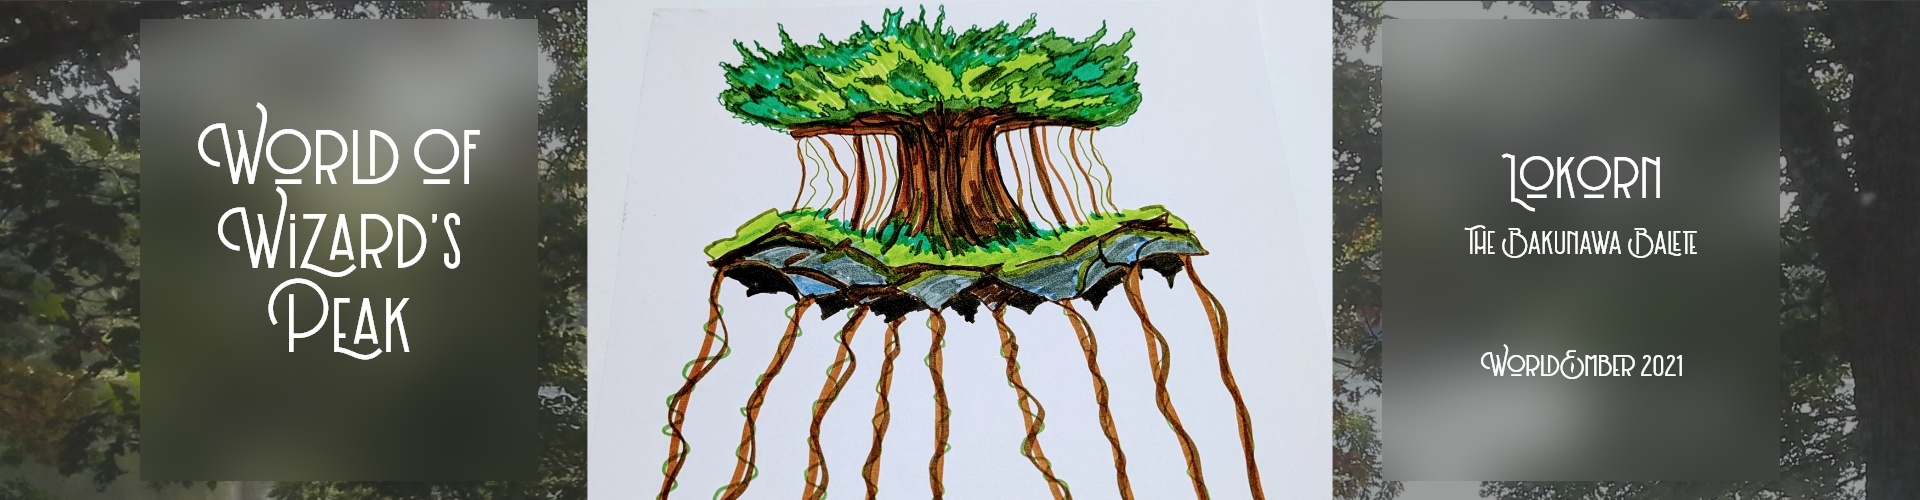 Hand drawn art of a balete tree on a floating island.